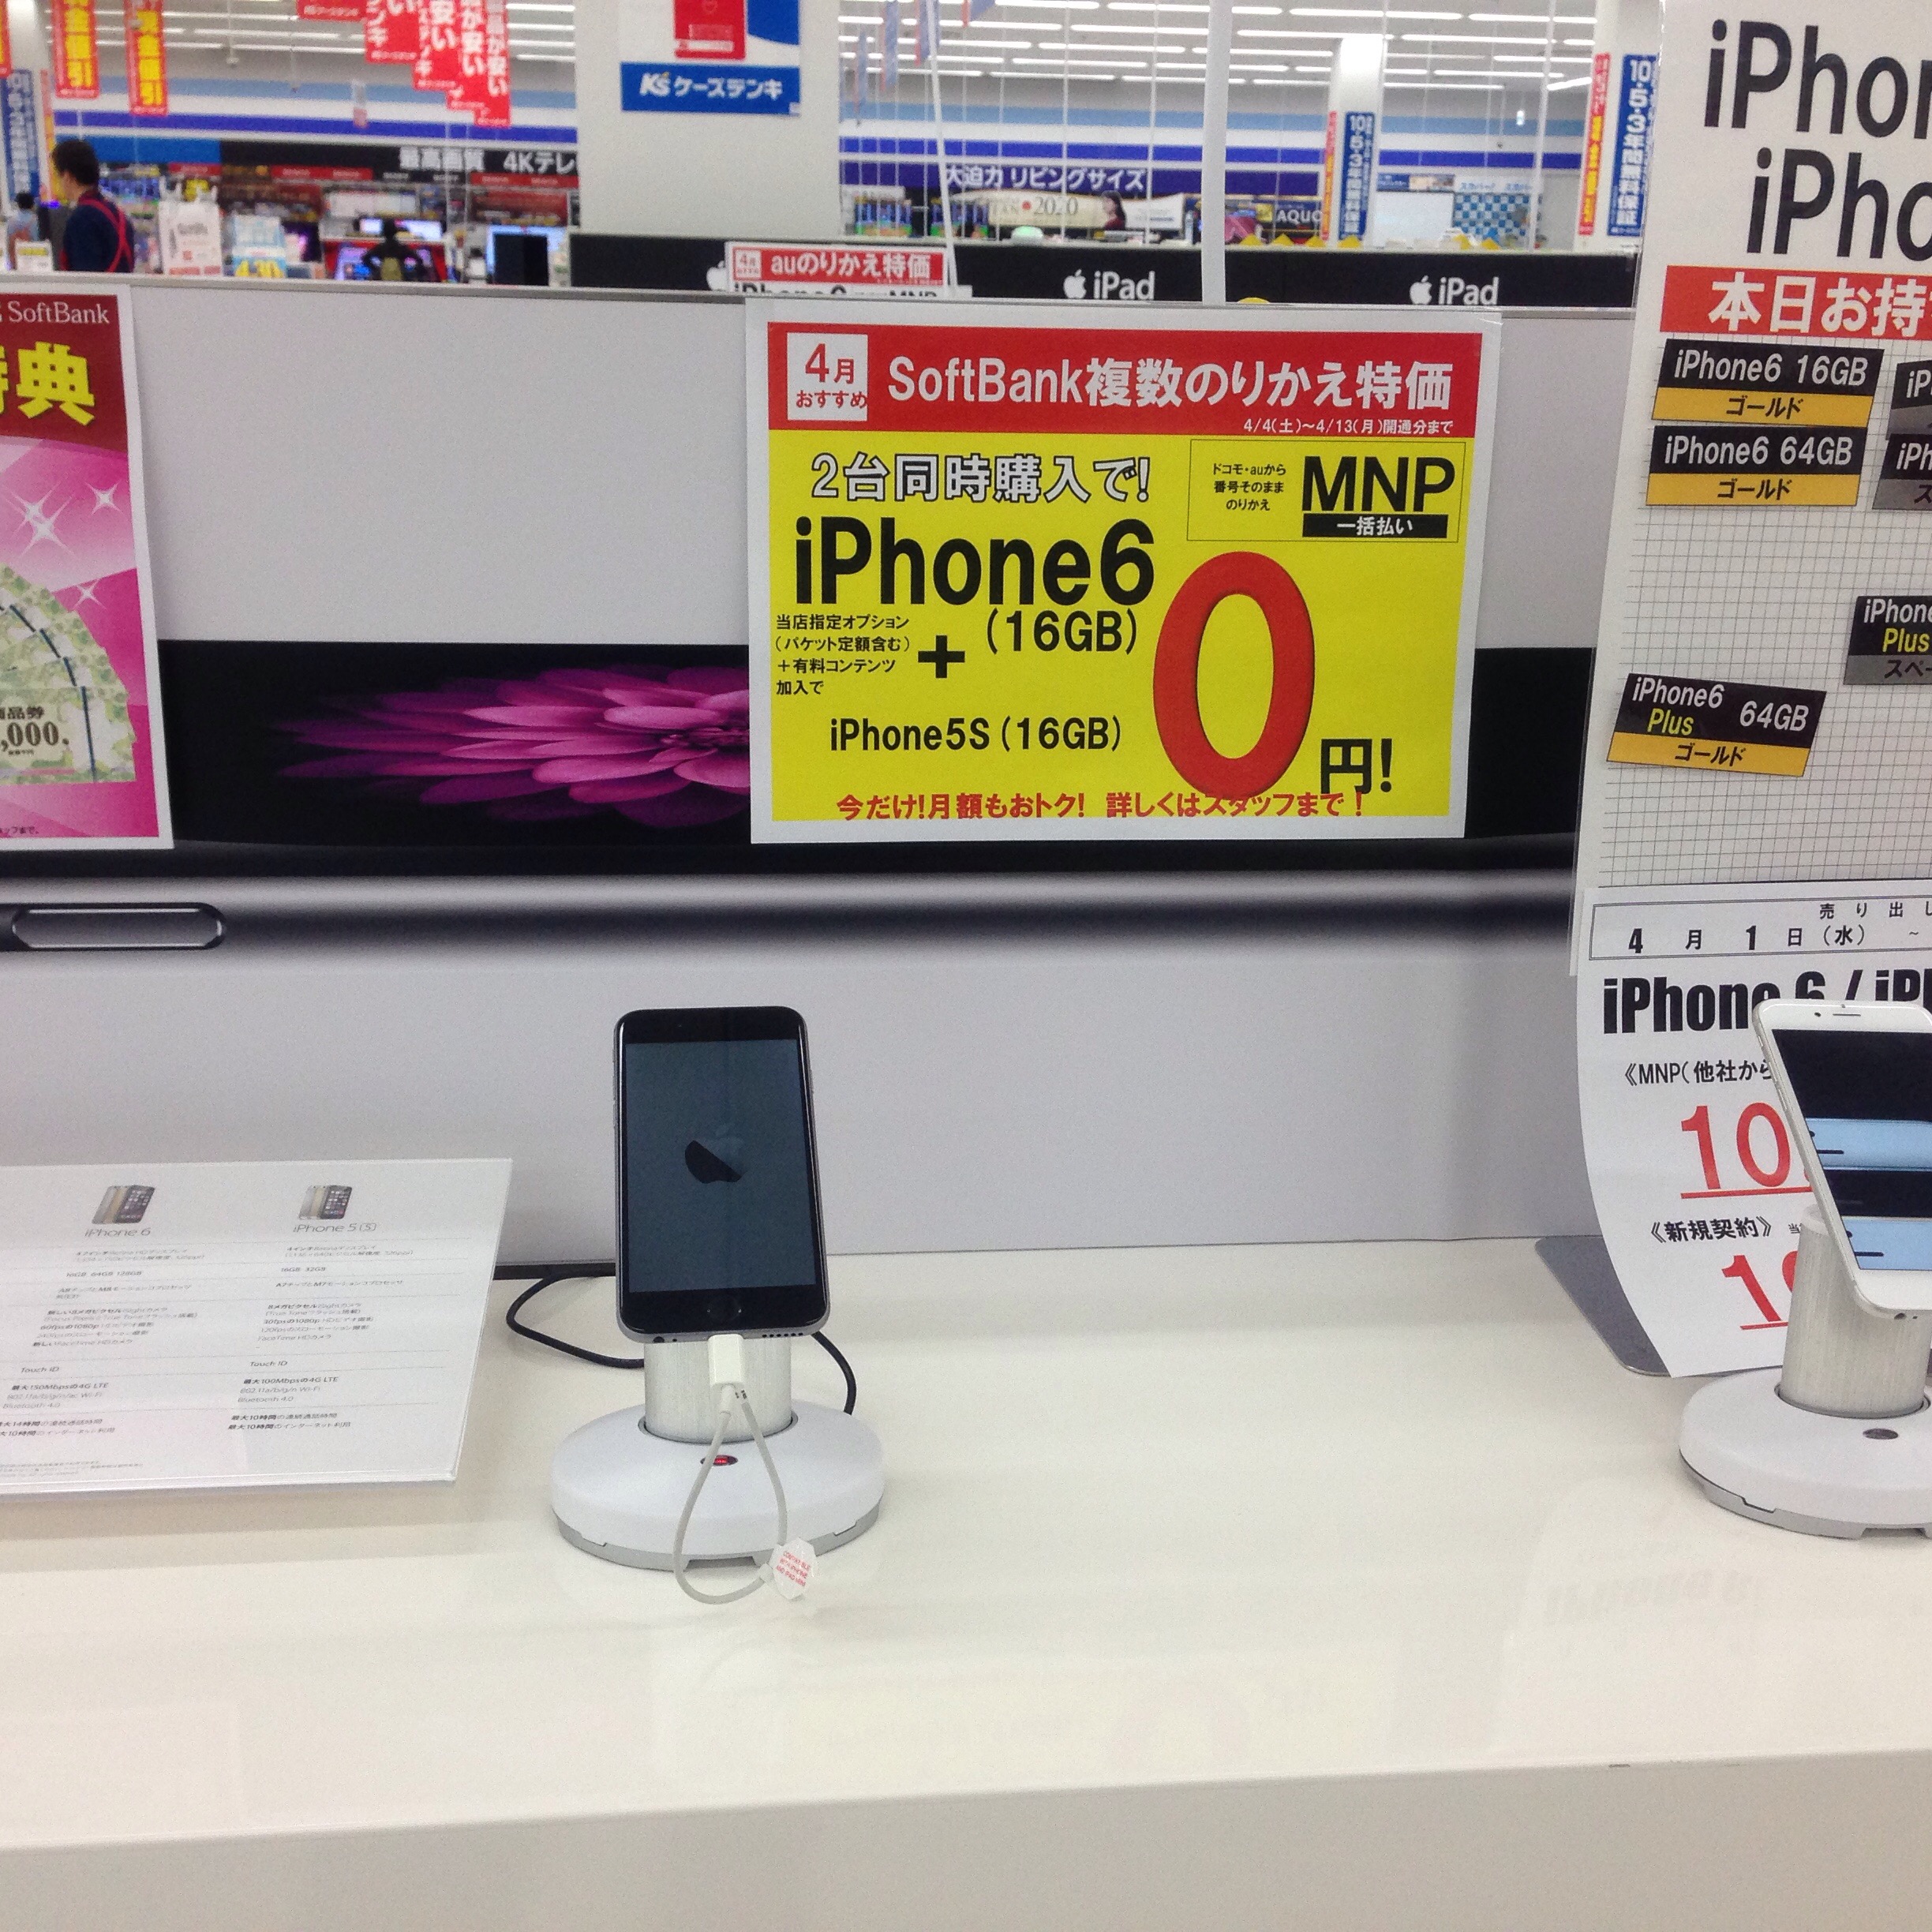 Iphone6の一括0円情報 奈良の西大和ケーズデンキ 通信ソムリエの経験談 携帯乞食でスマホを乗り換えた方法と実際の収支